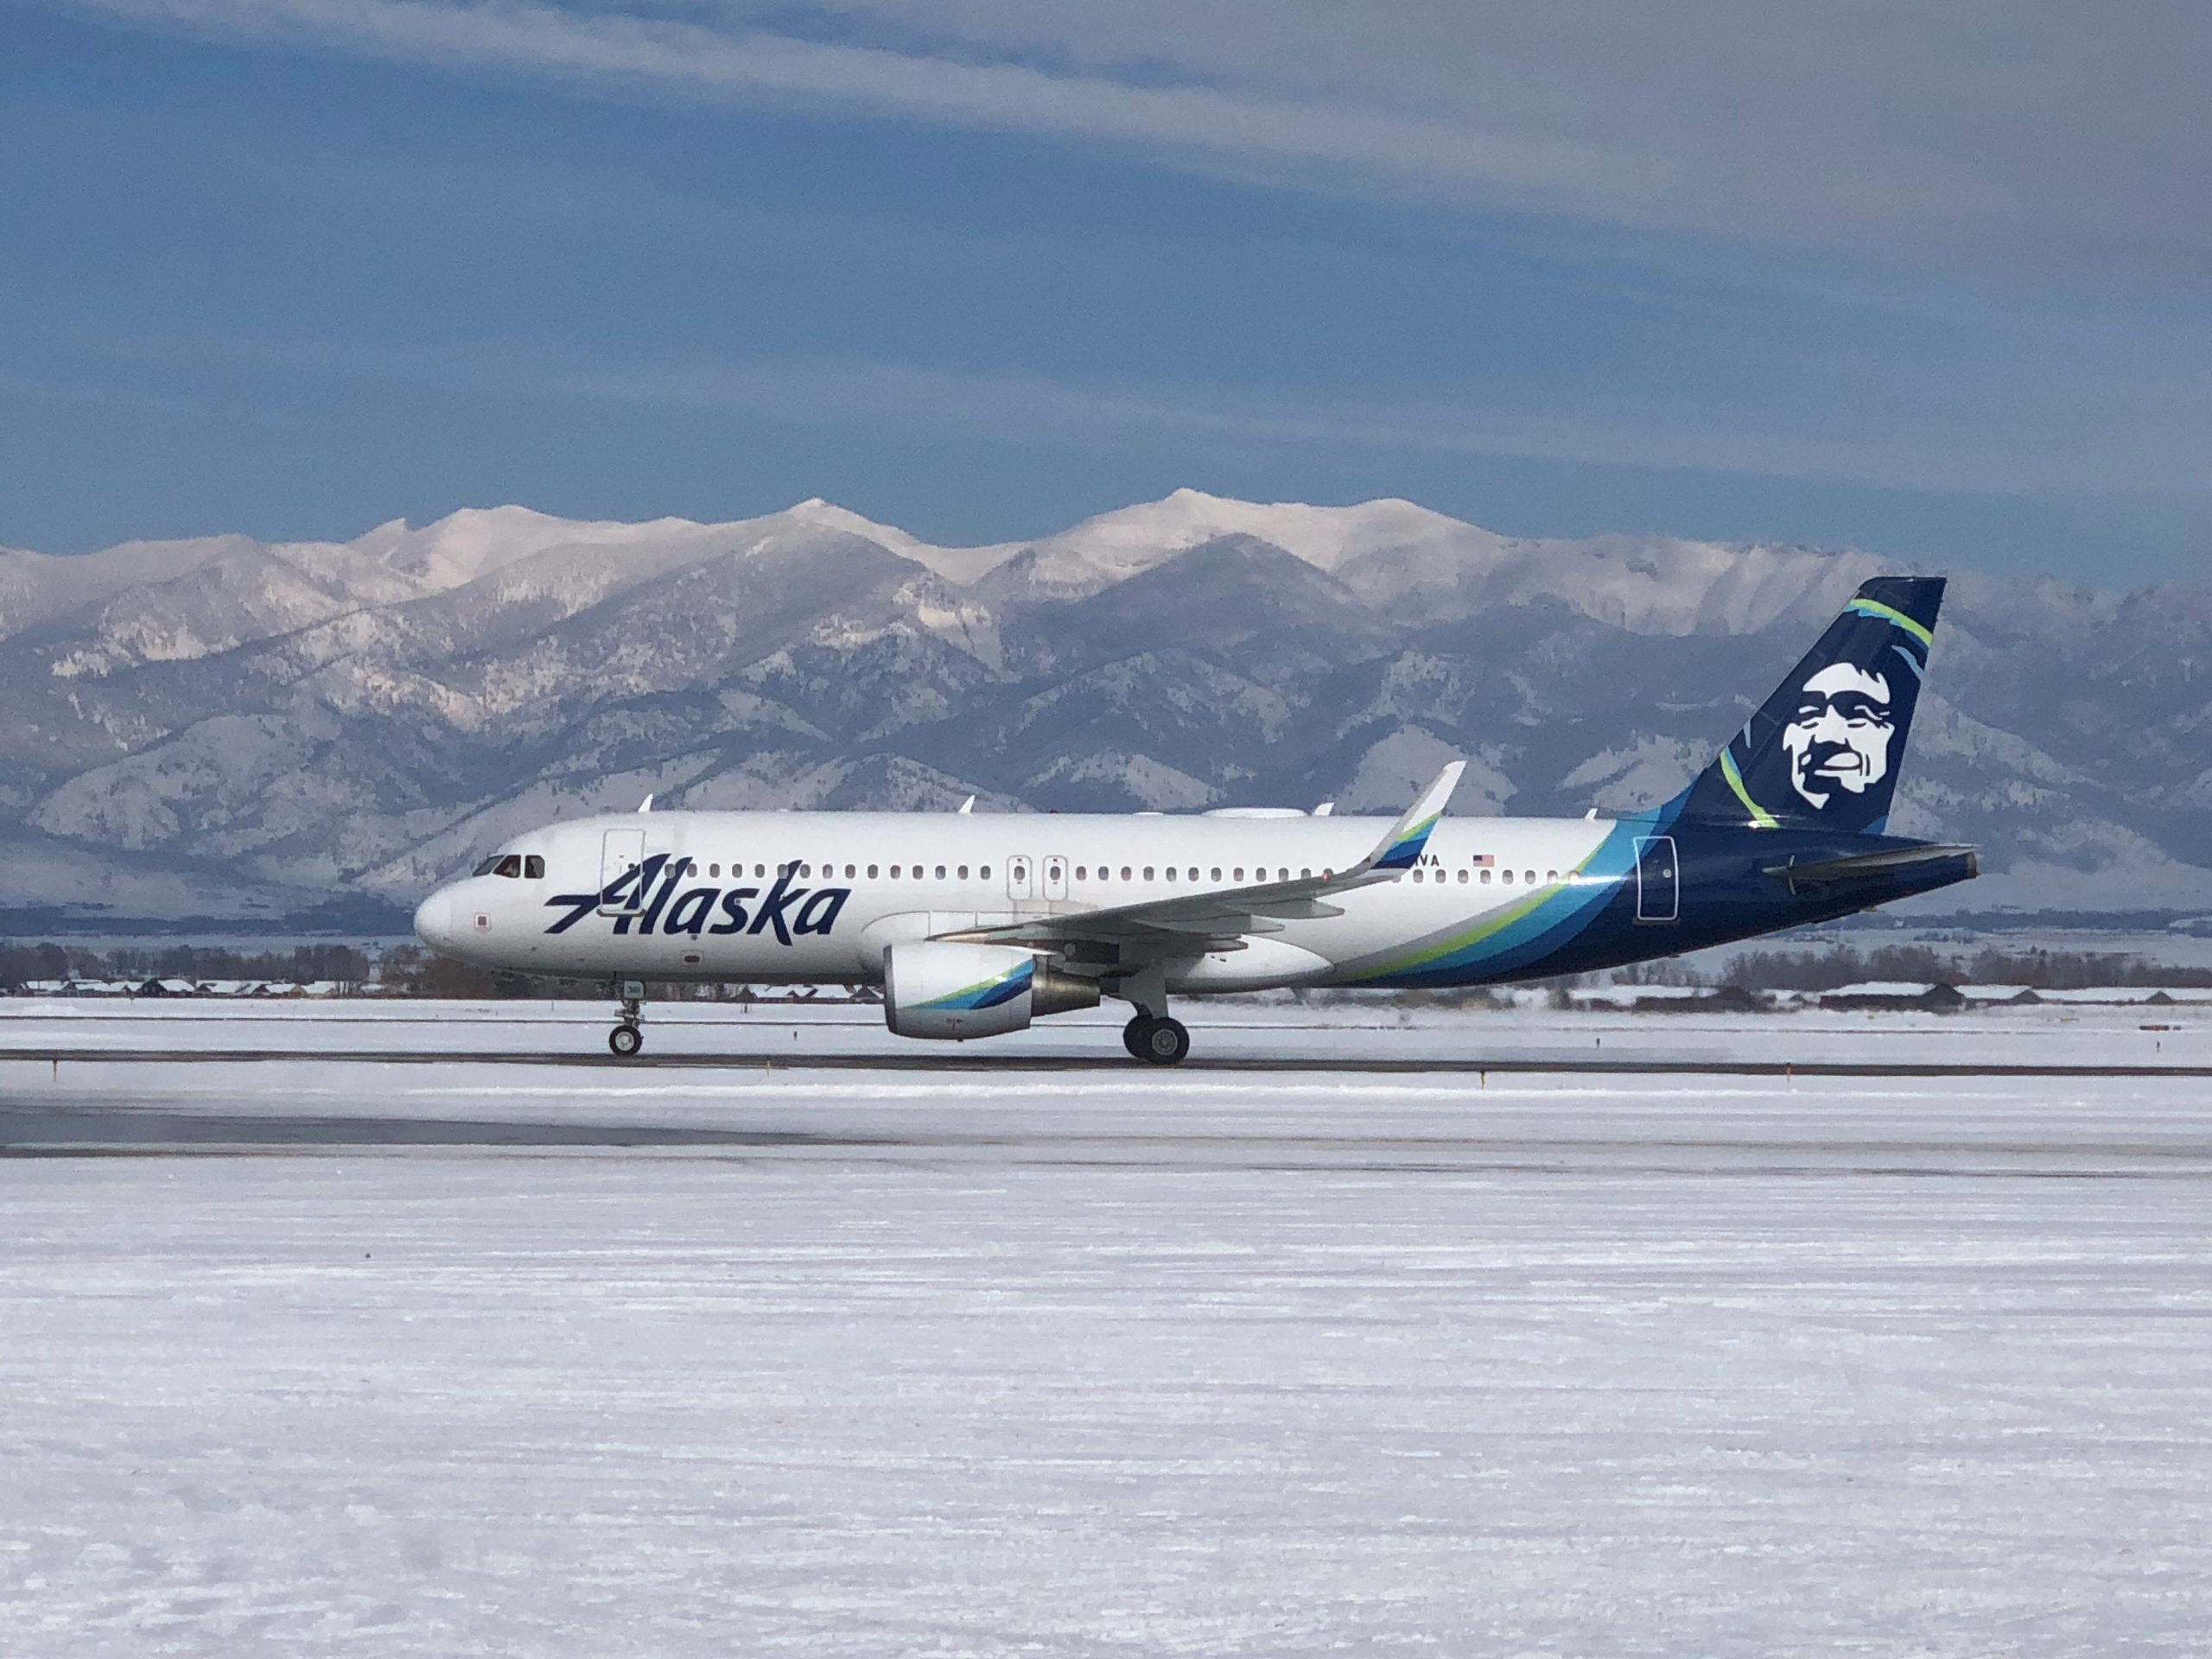 Alaska airlines flight arriving at Bozeman Airport